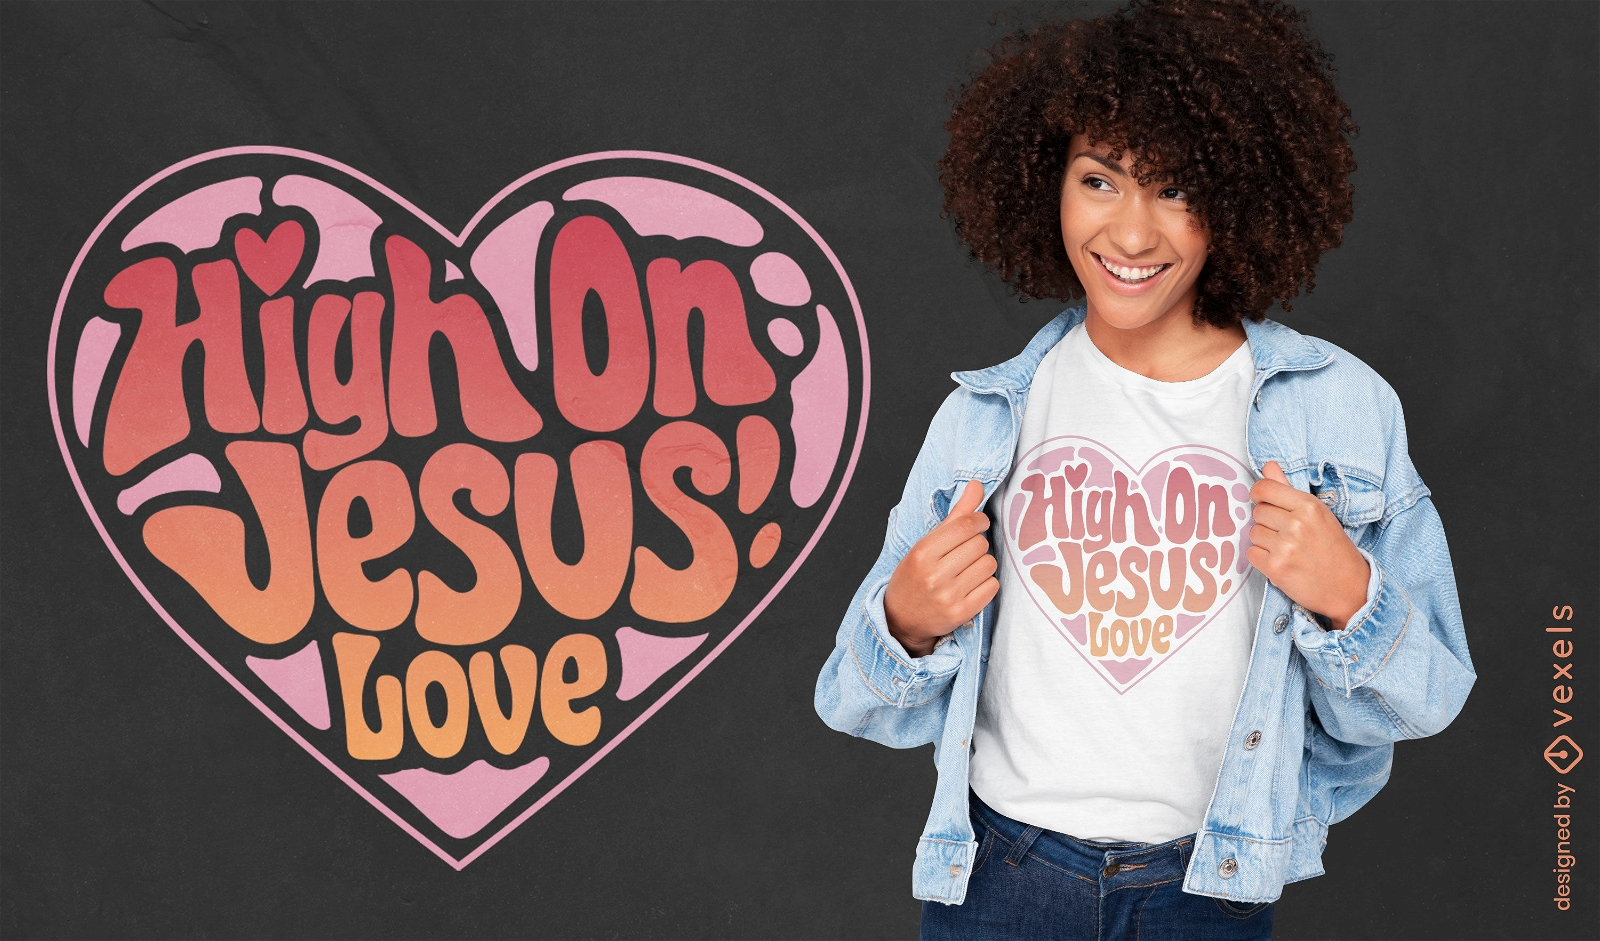 High on Jesus love heart t-shirt design